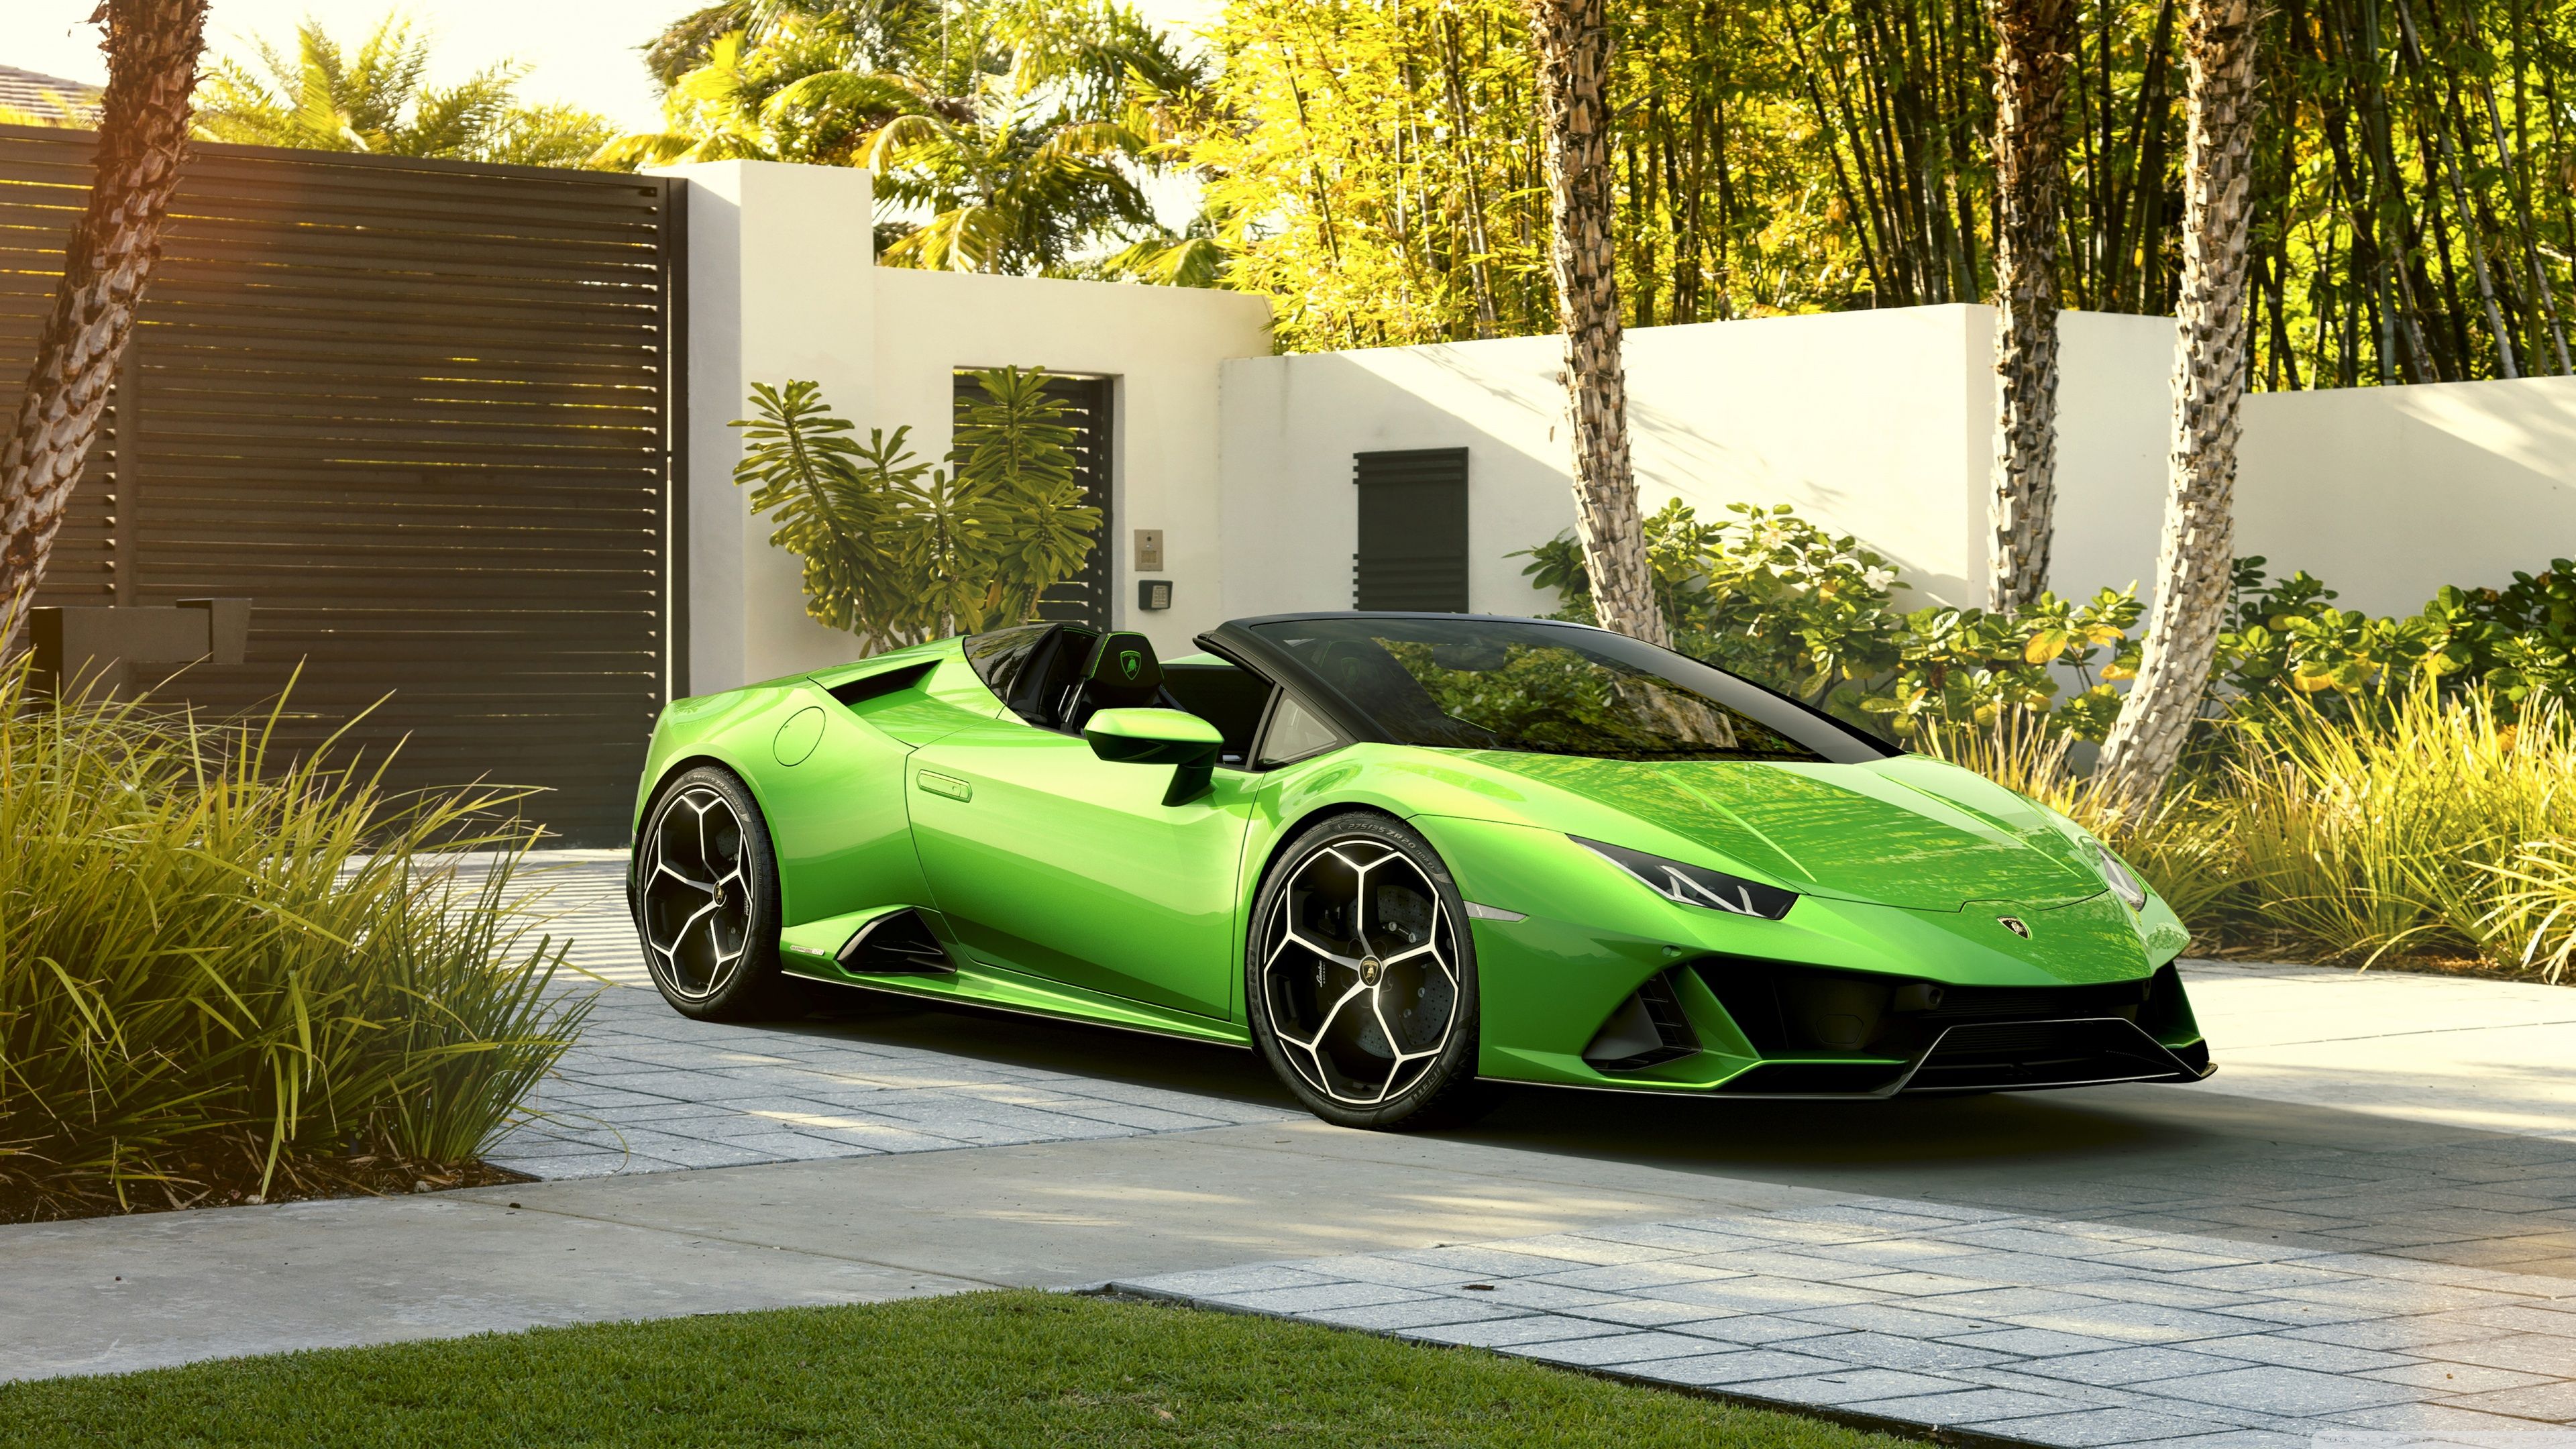 Green Lamborghini Huracan Evo Spyder Supercar Ultra HD Desktop Background Wallpaper for: Widescreen & UltraWide Desktop & Laptop, Multi Display, Dual & Triple Monitor, Tablet